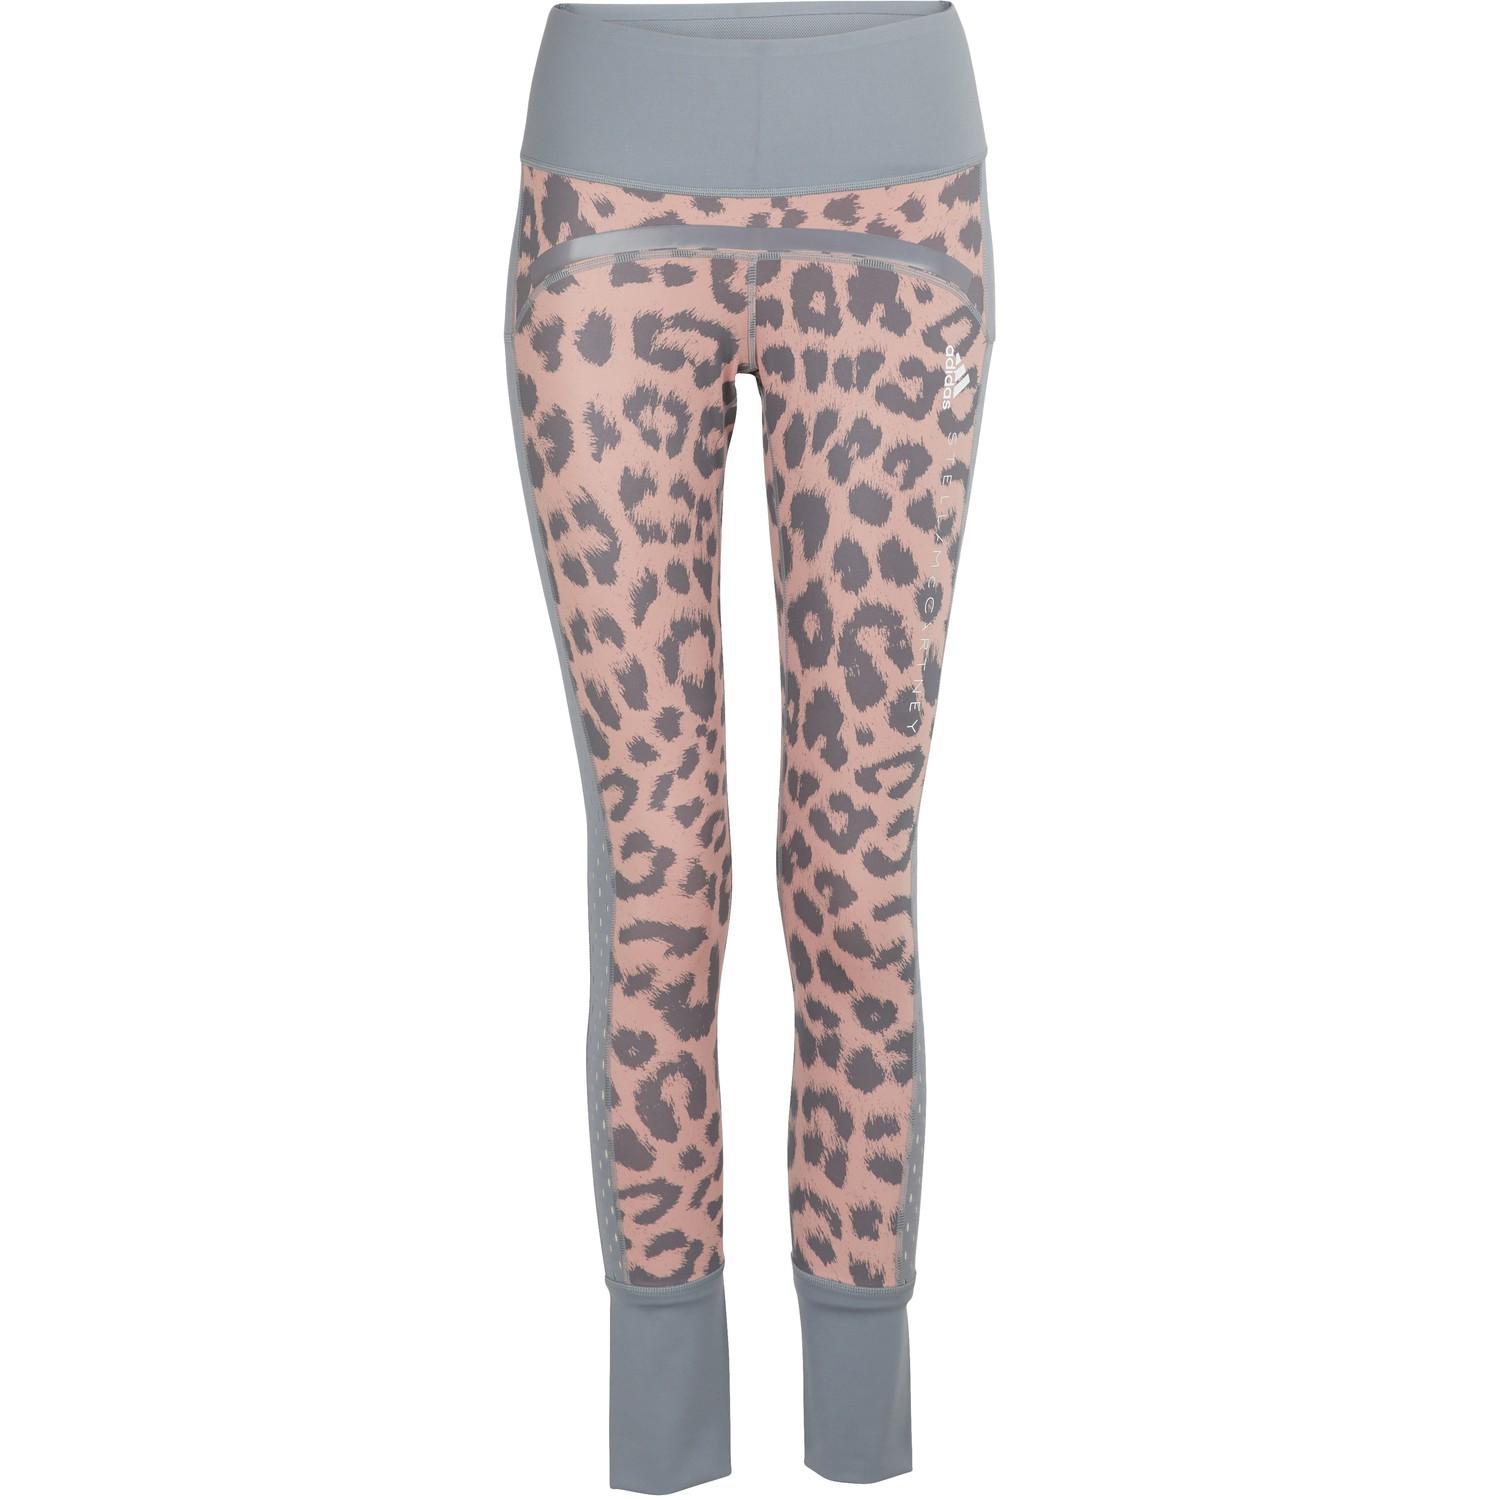 adidas By Stella McCartney Comfort Leopard leggings in Grey/Pink (Pink) -  Lyst